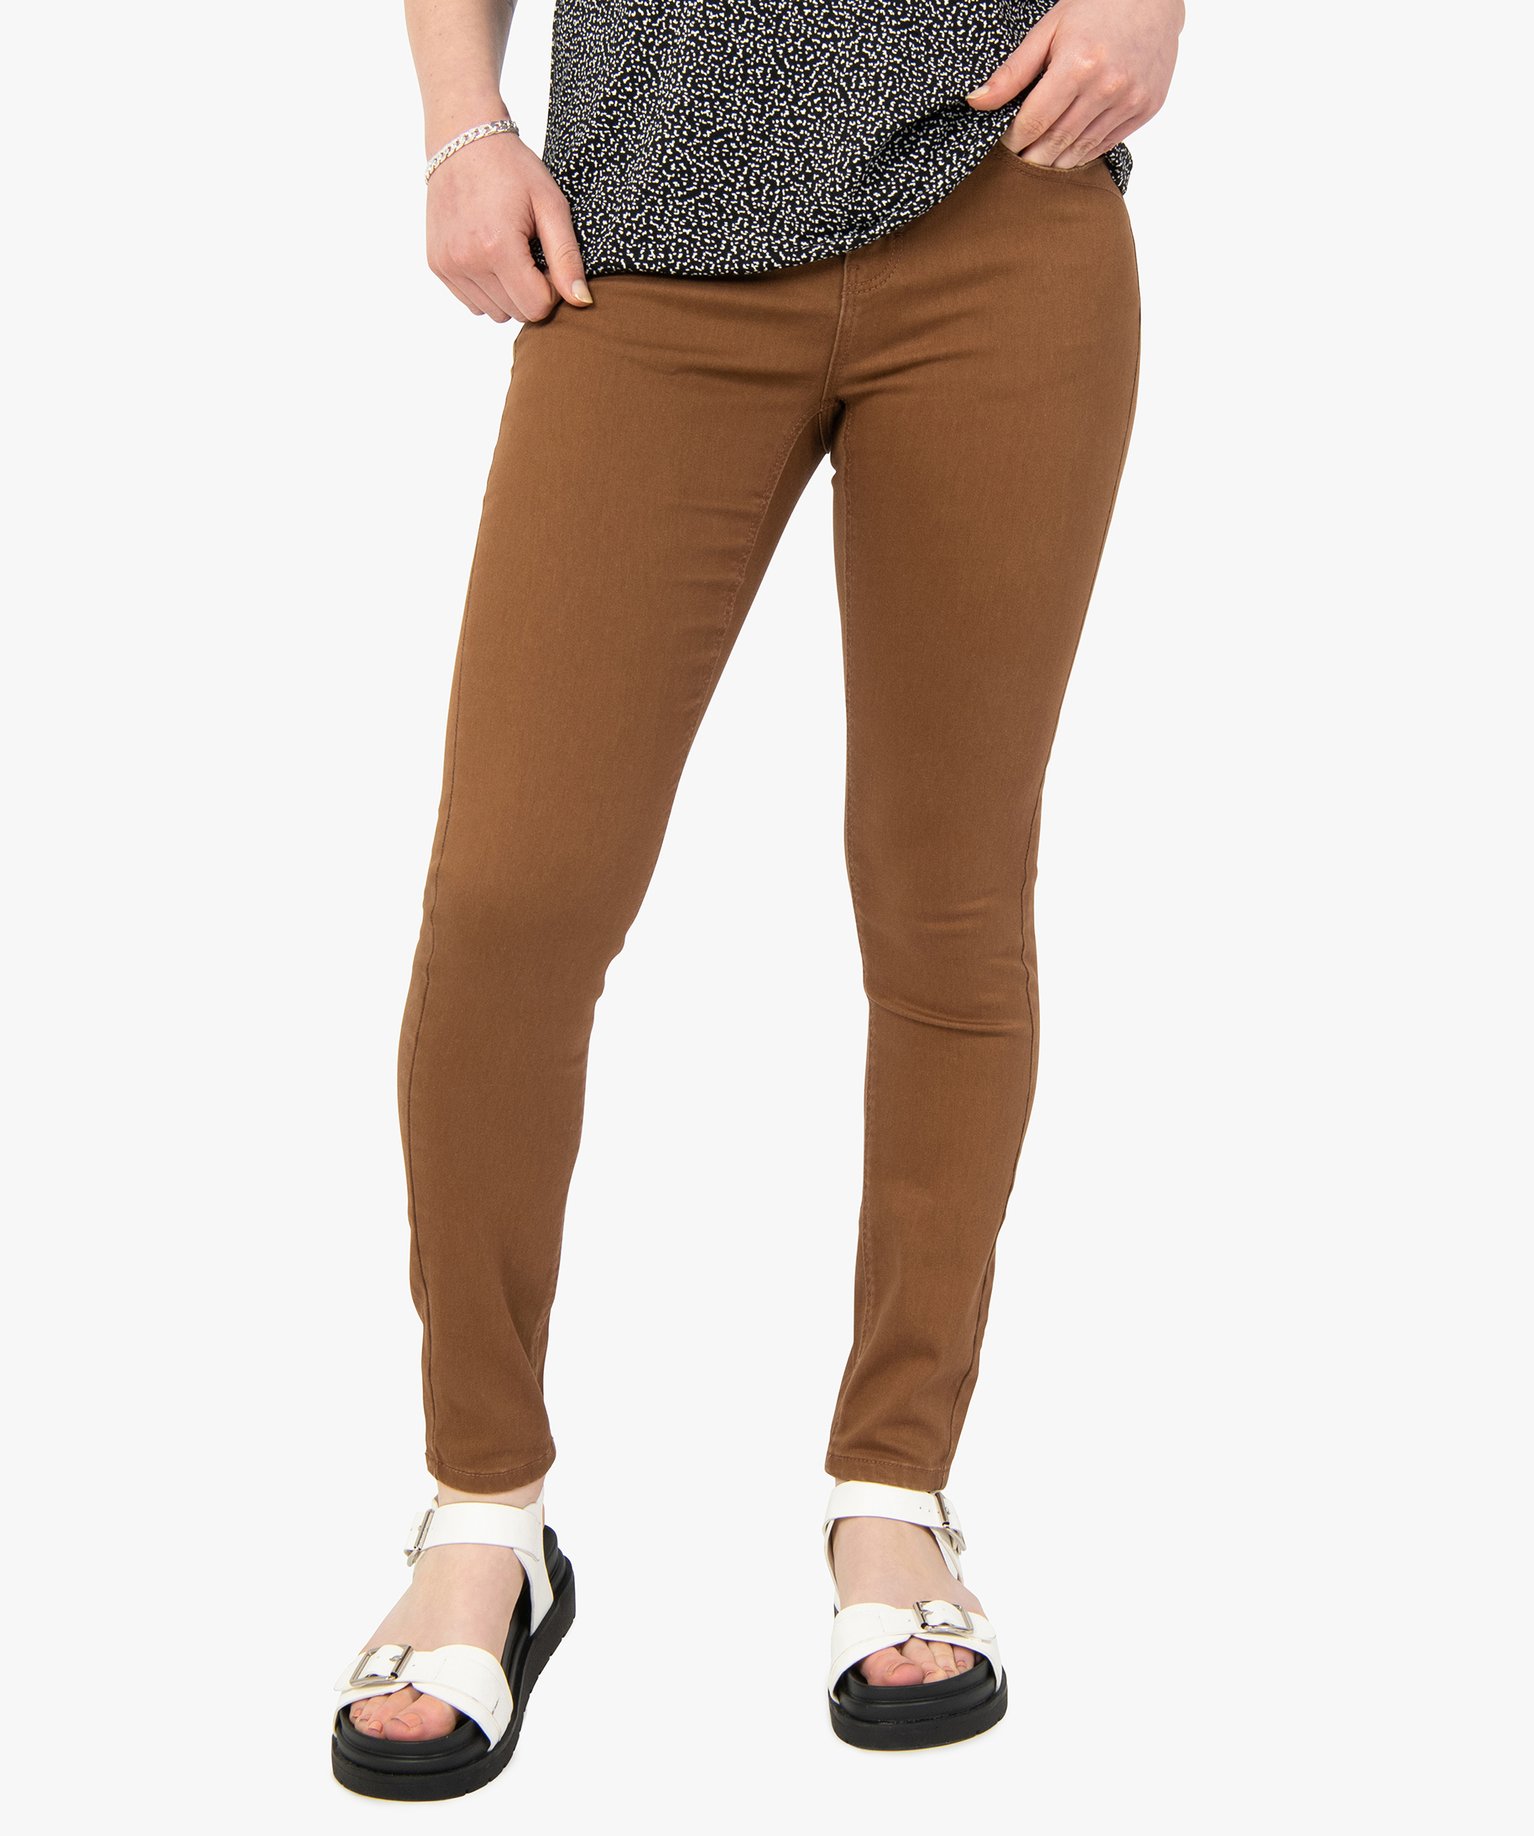 pantalon femme coupe slim en toile extensible brun pantalons